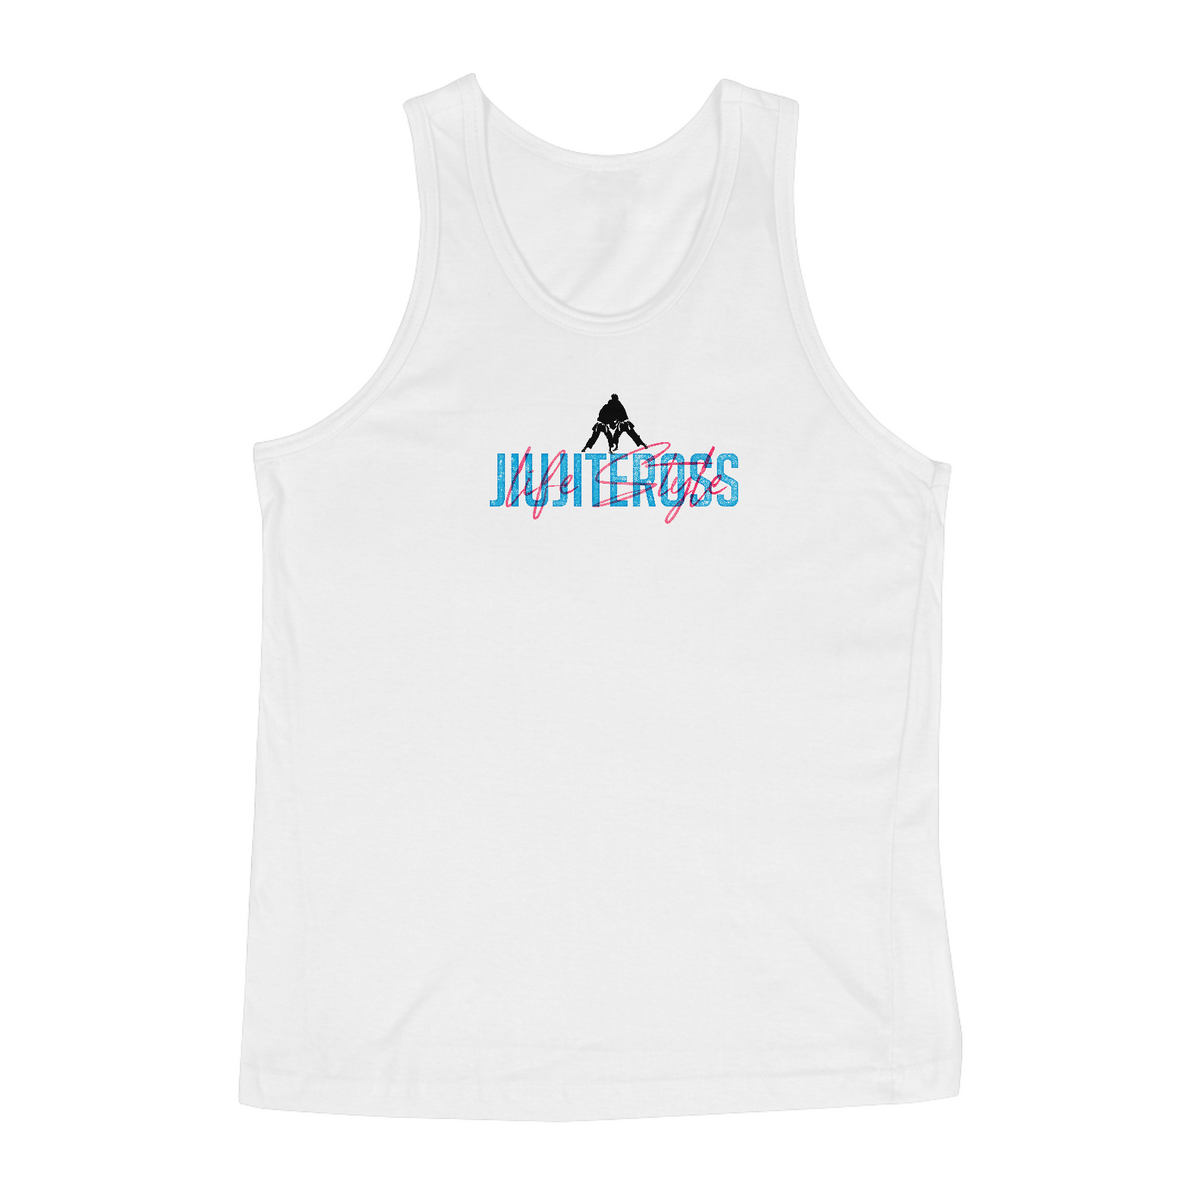 Nome do produto: Camiseta Regata JiujiterOss Life Style